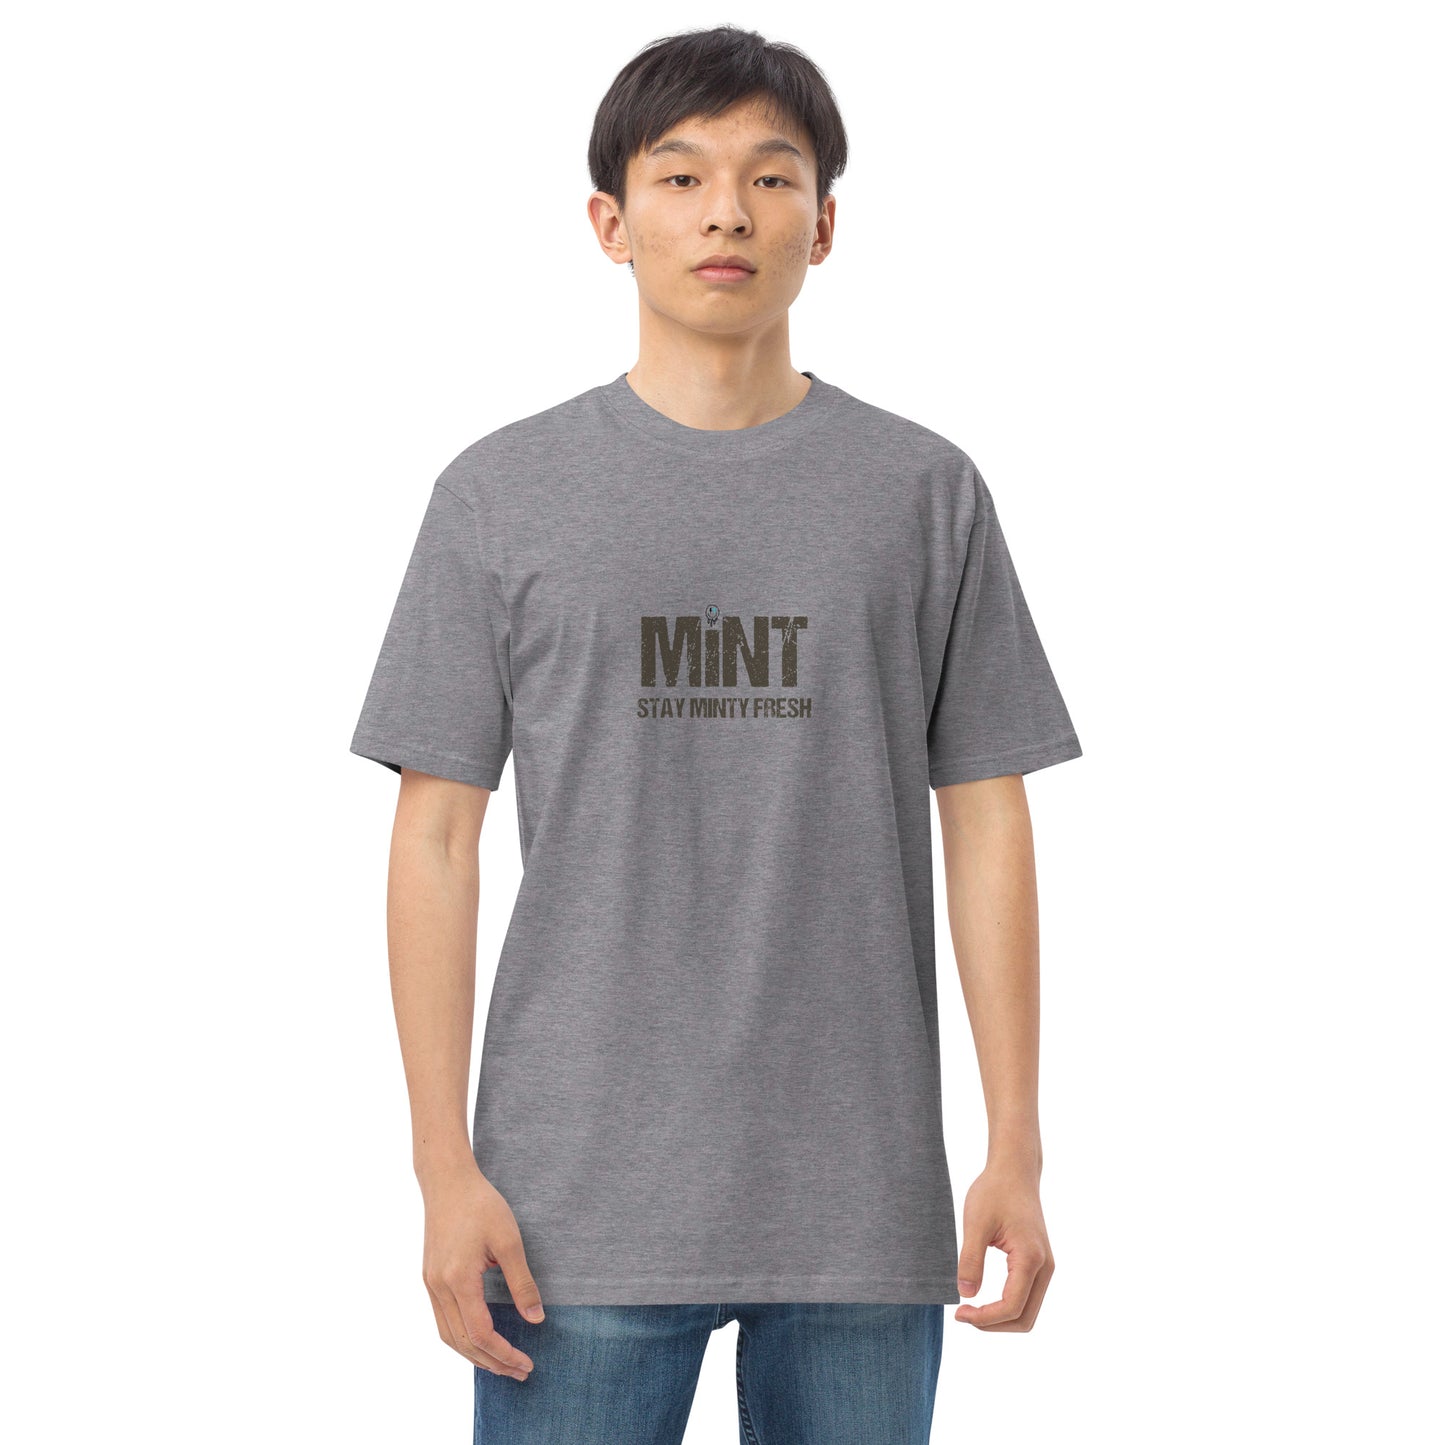 Stay Minty Fresh Shirt